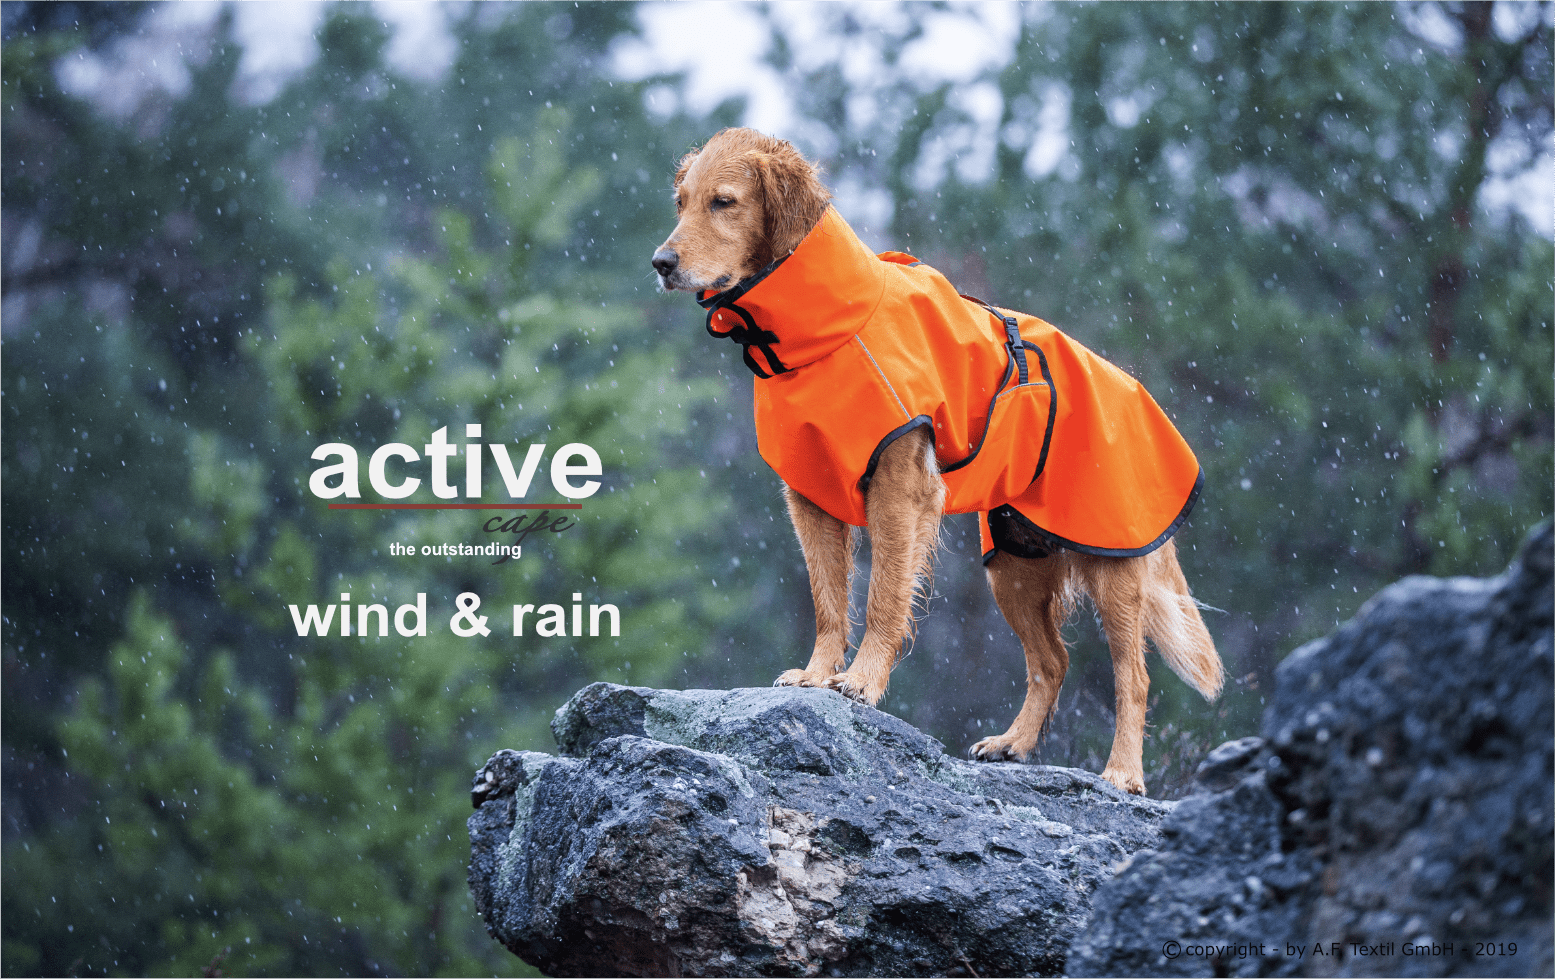 active-cape-wind-rain-orange3